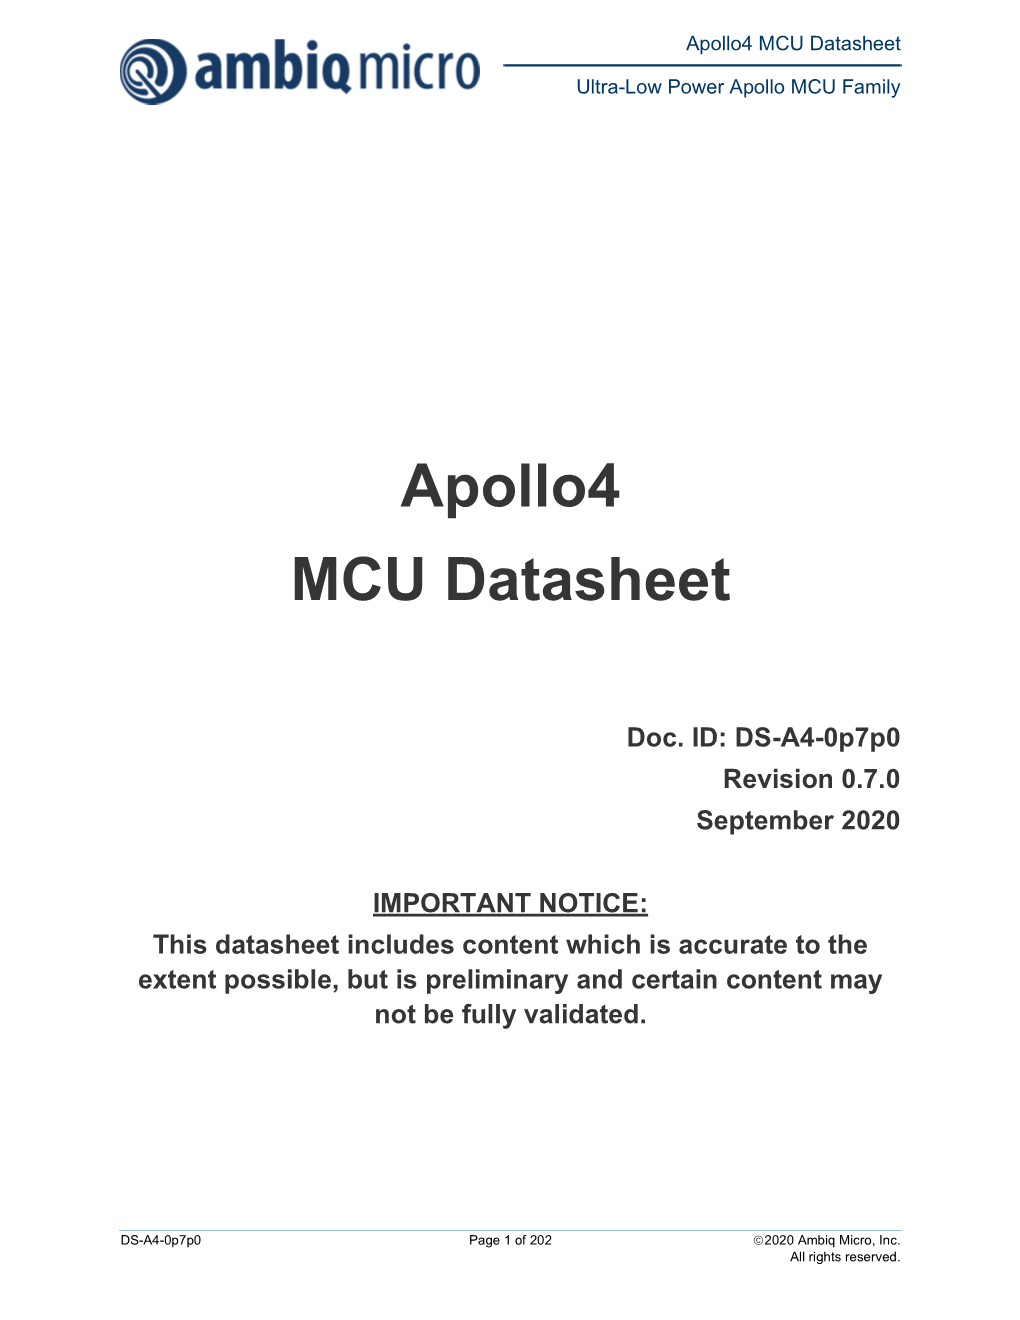 Apollo4 MCU Datasheet V0.7.0